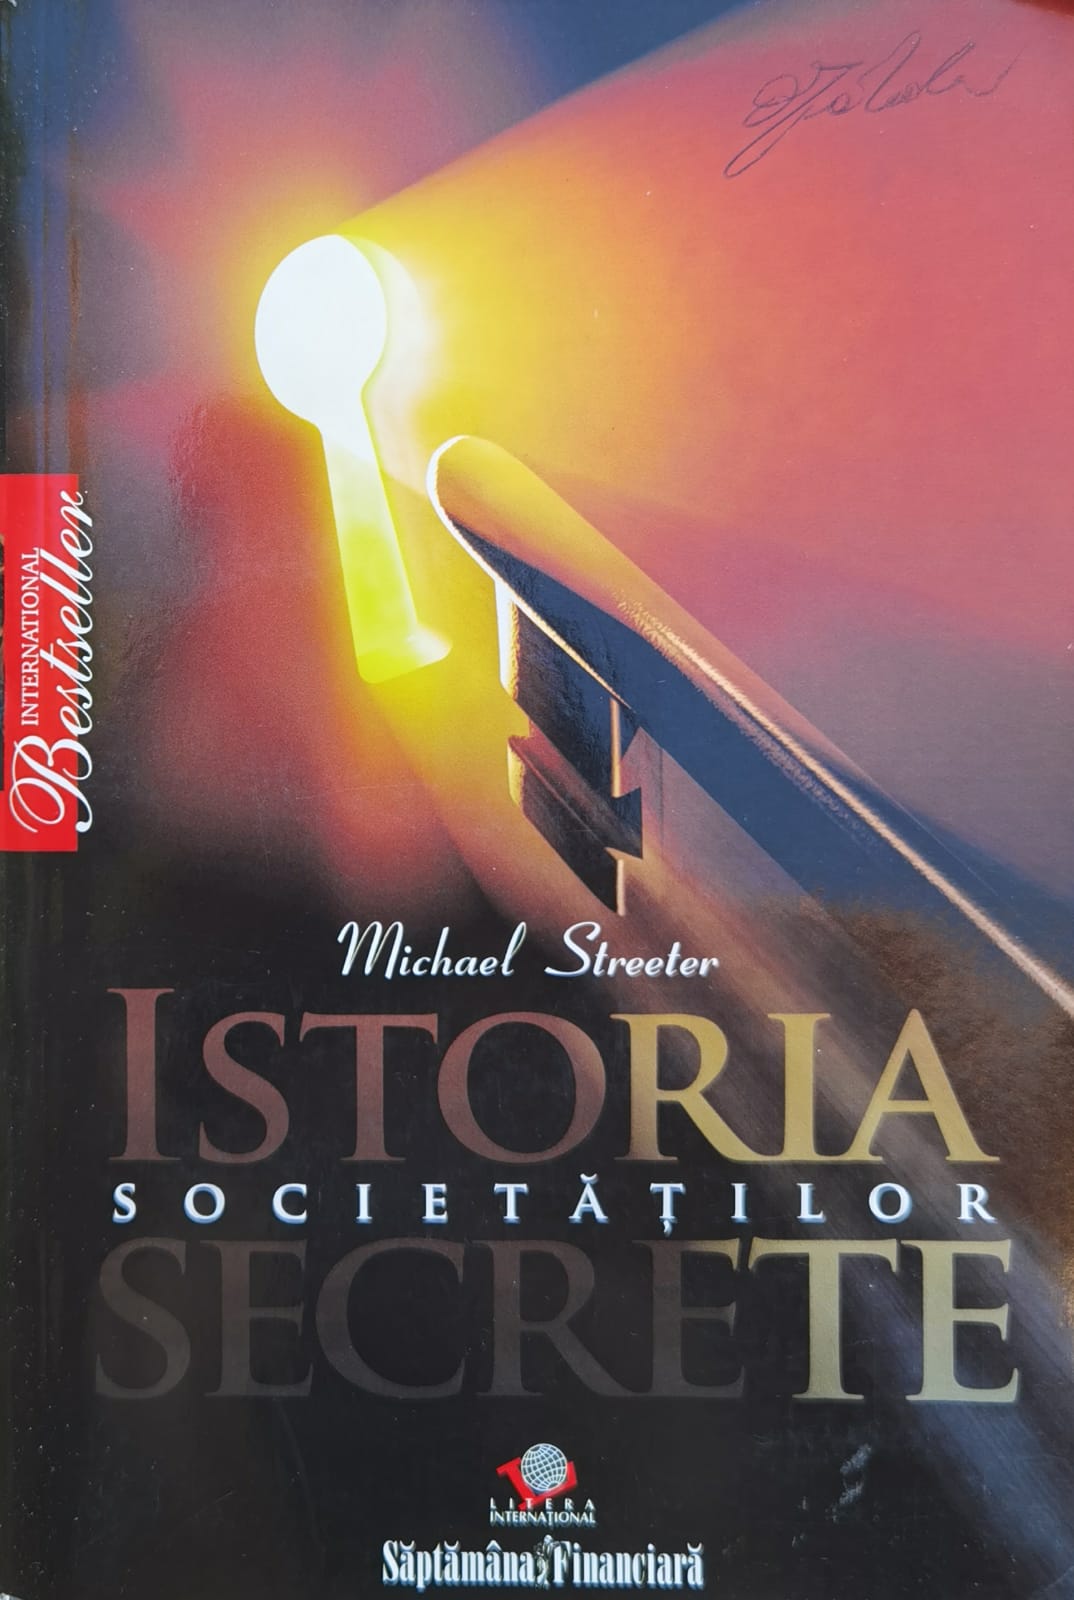 istoria societatilor secrete                                                                         michael streeter                                                                                    